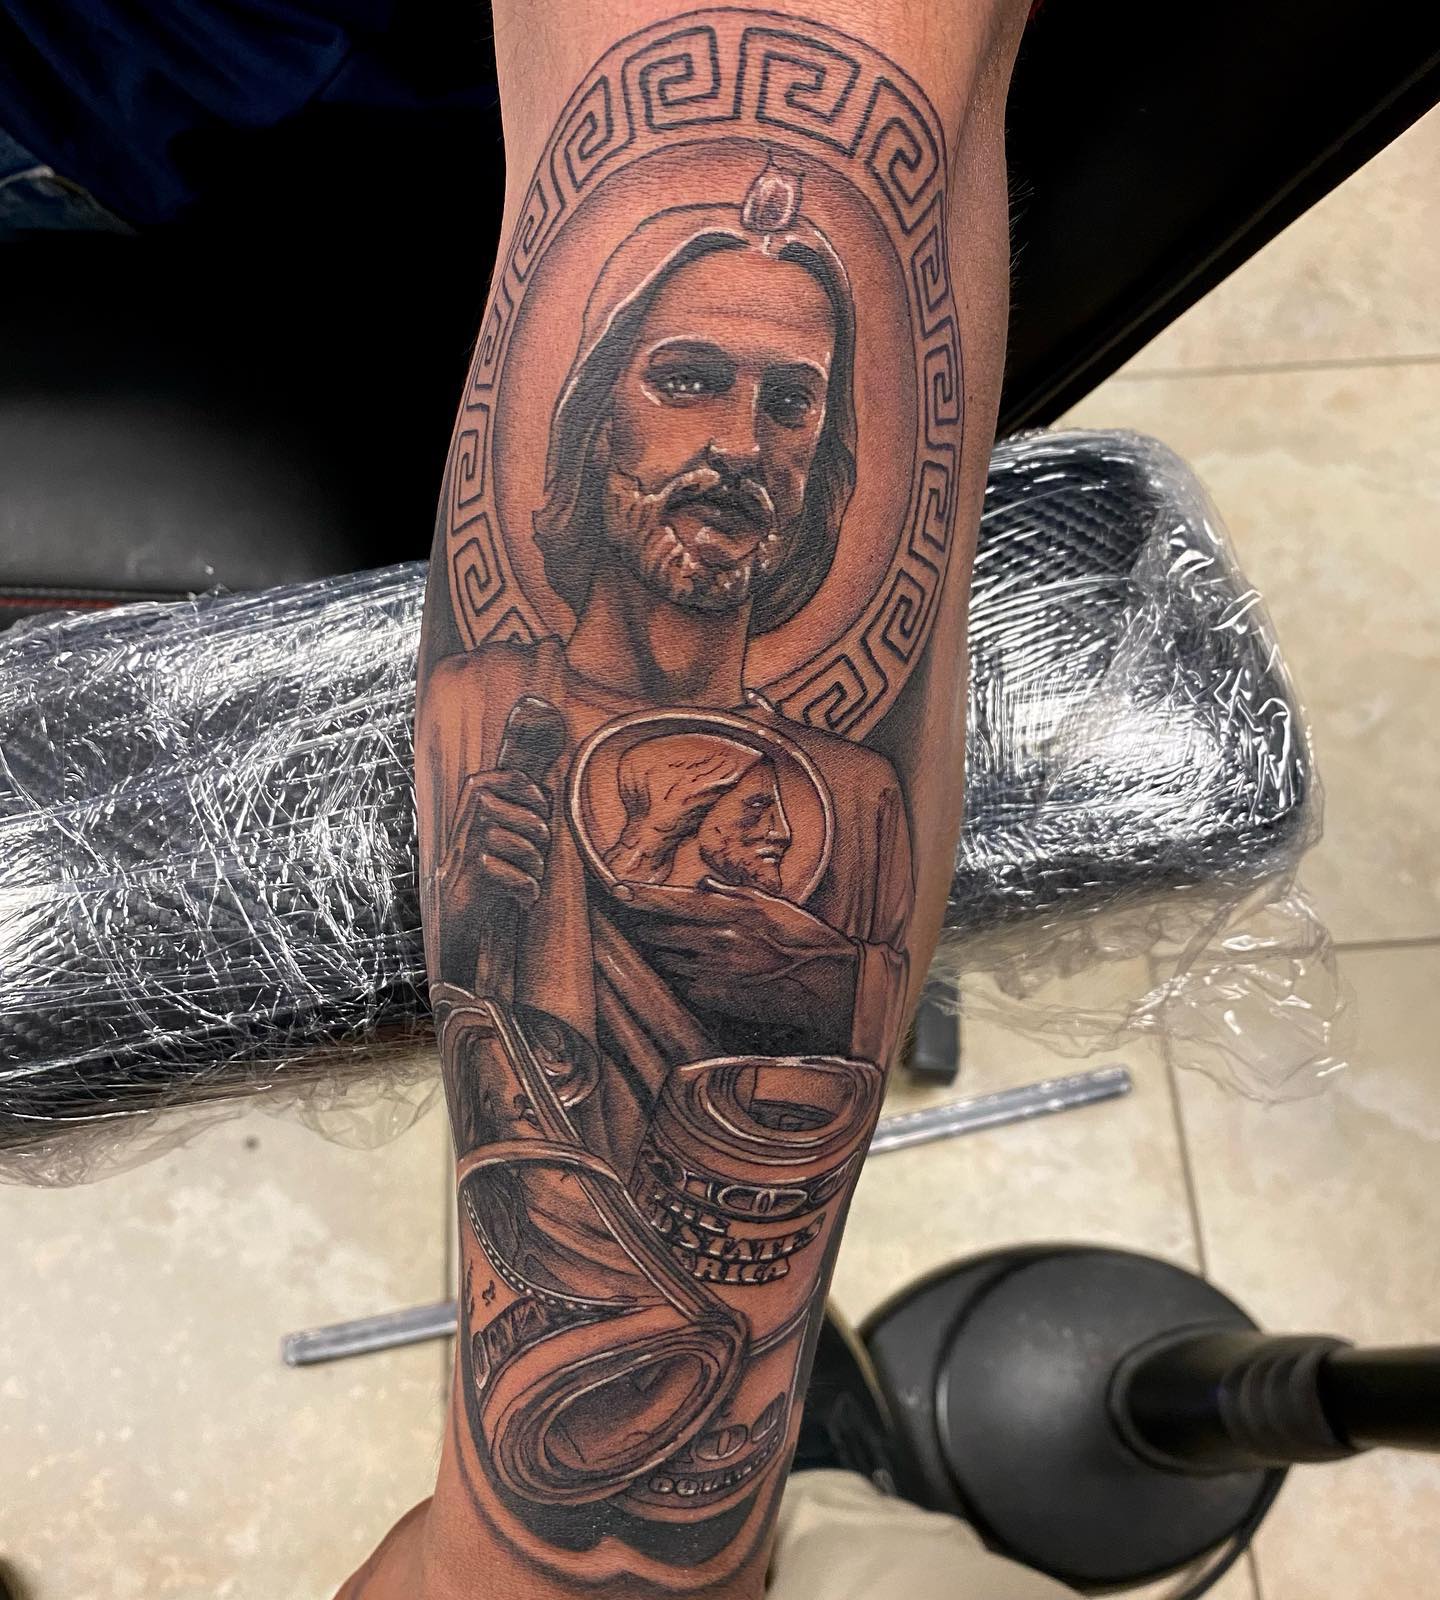 20 Mindblowing San Judas forearm tattoos